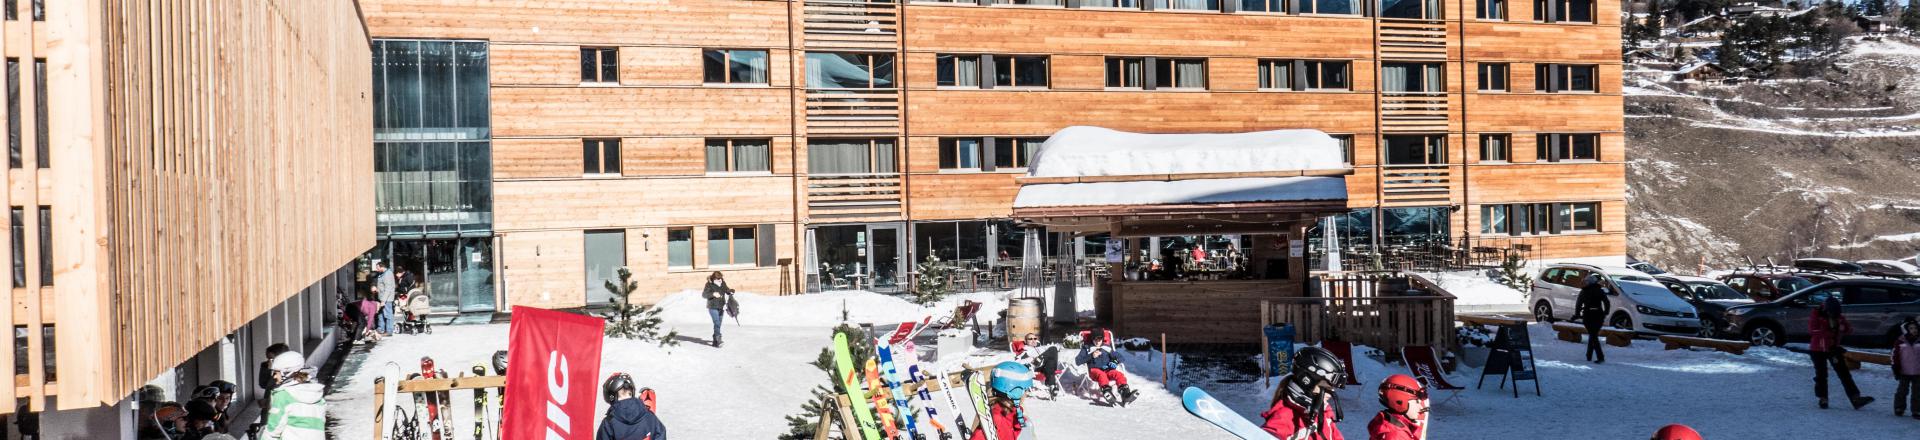 Location au ski Résidence Swisspeak Resorts Vercorin - Vercorin - Extérieur hiver